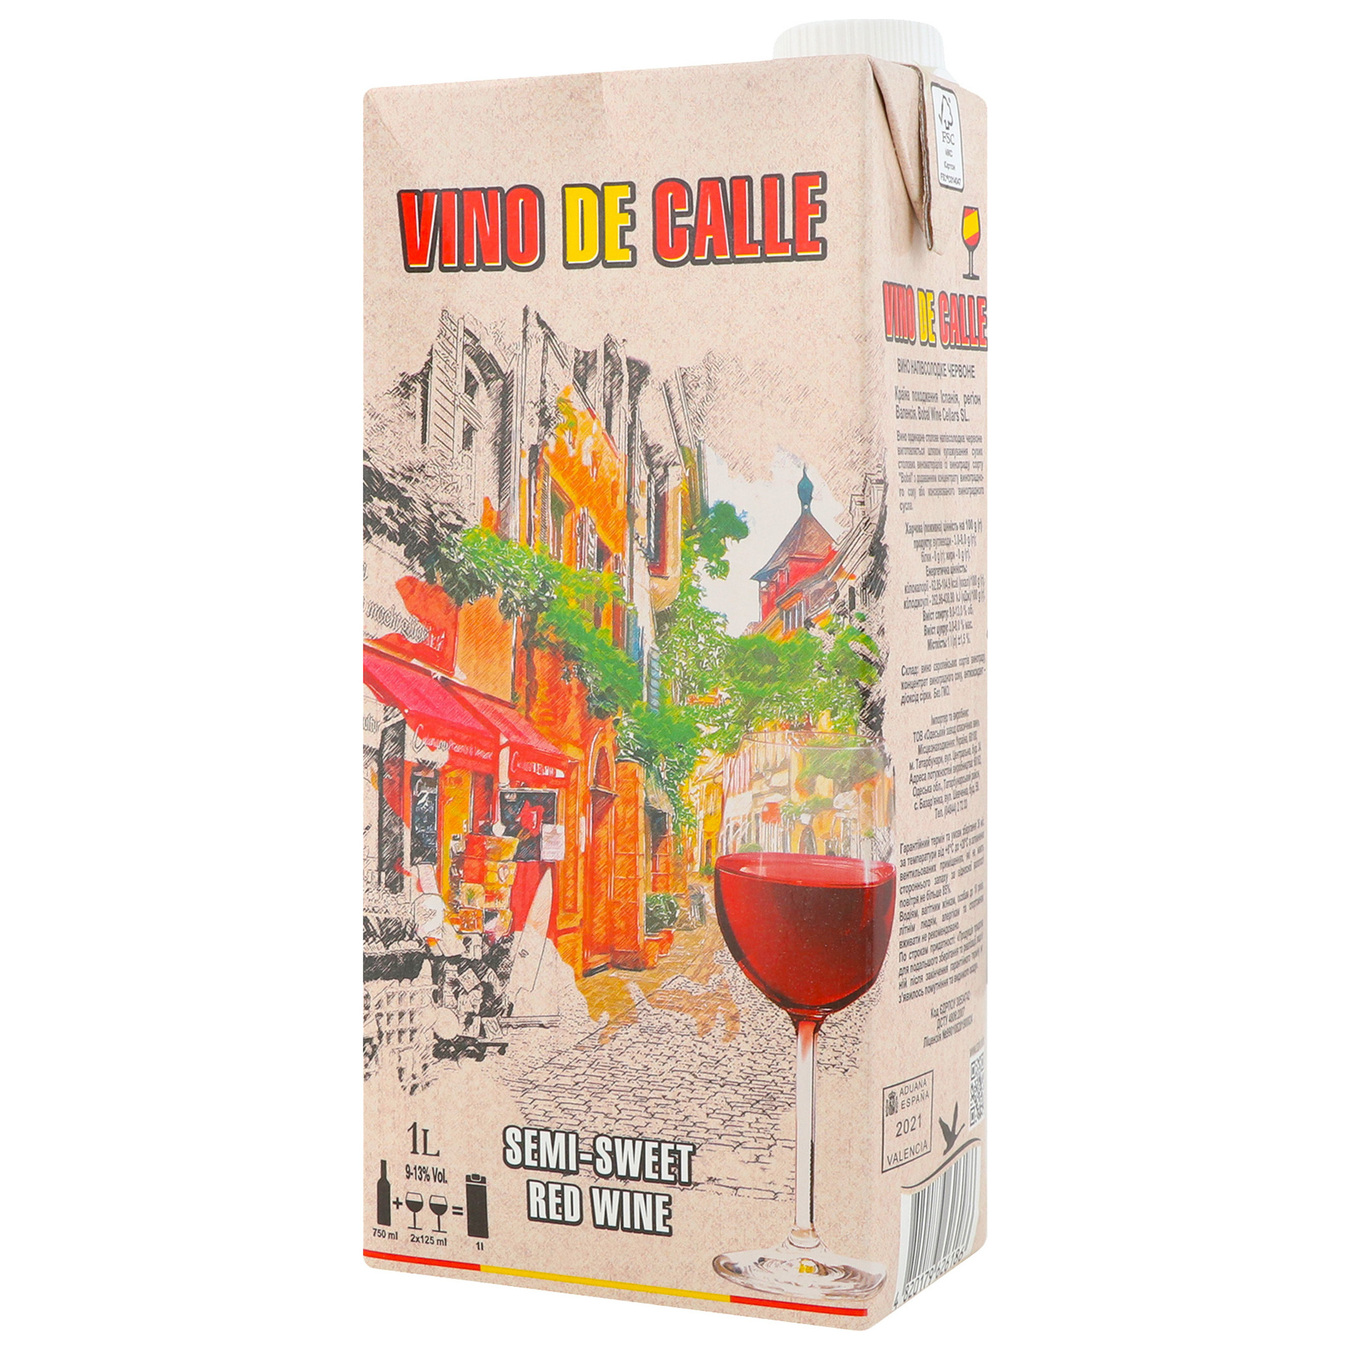 Vinno de Calle semi-sweet red wine 9-13% 1 liter 2